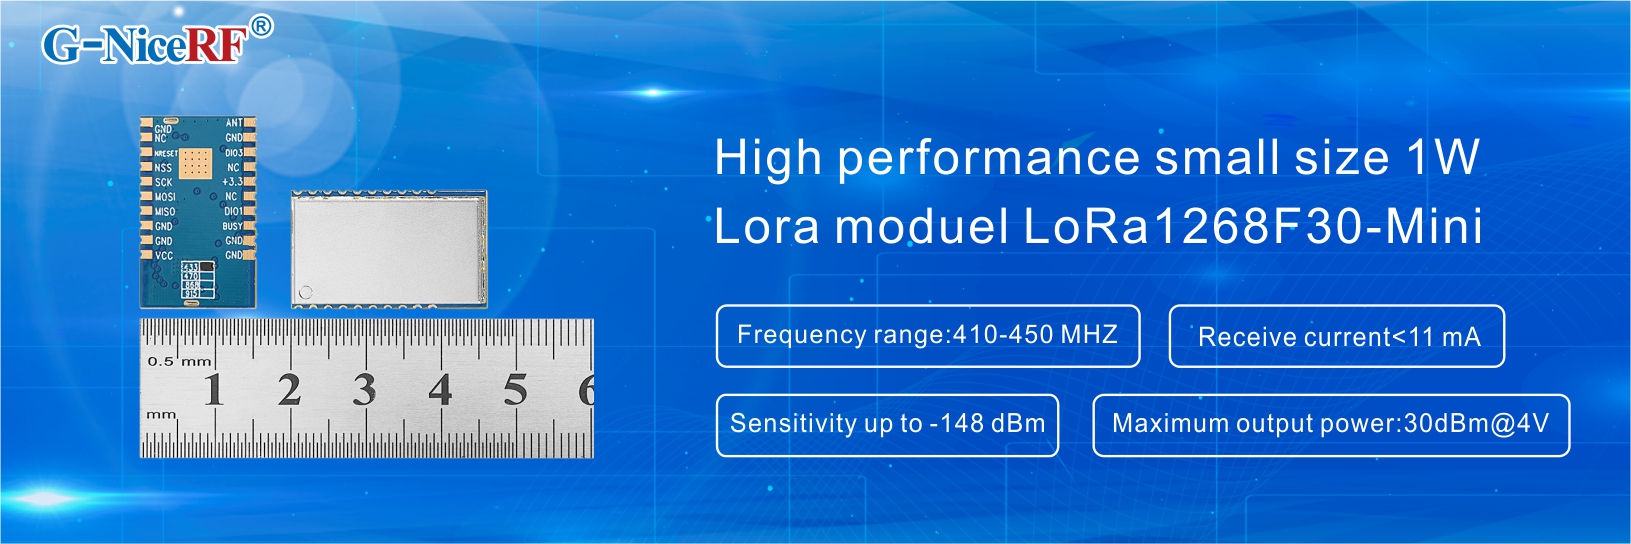 LoRa module LoRa1268F30-Mini